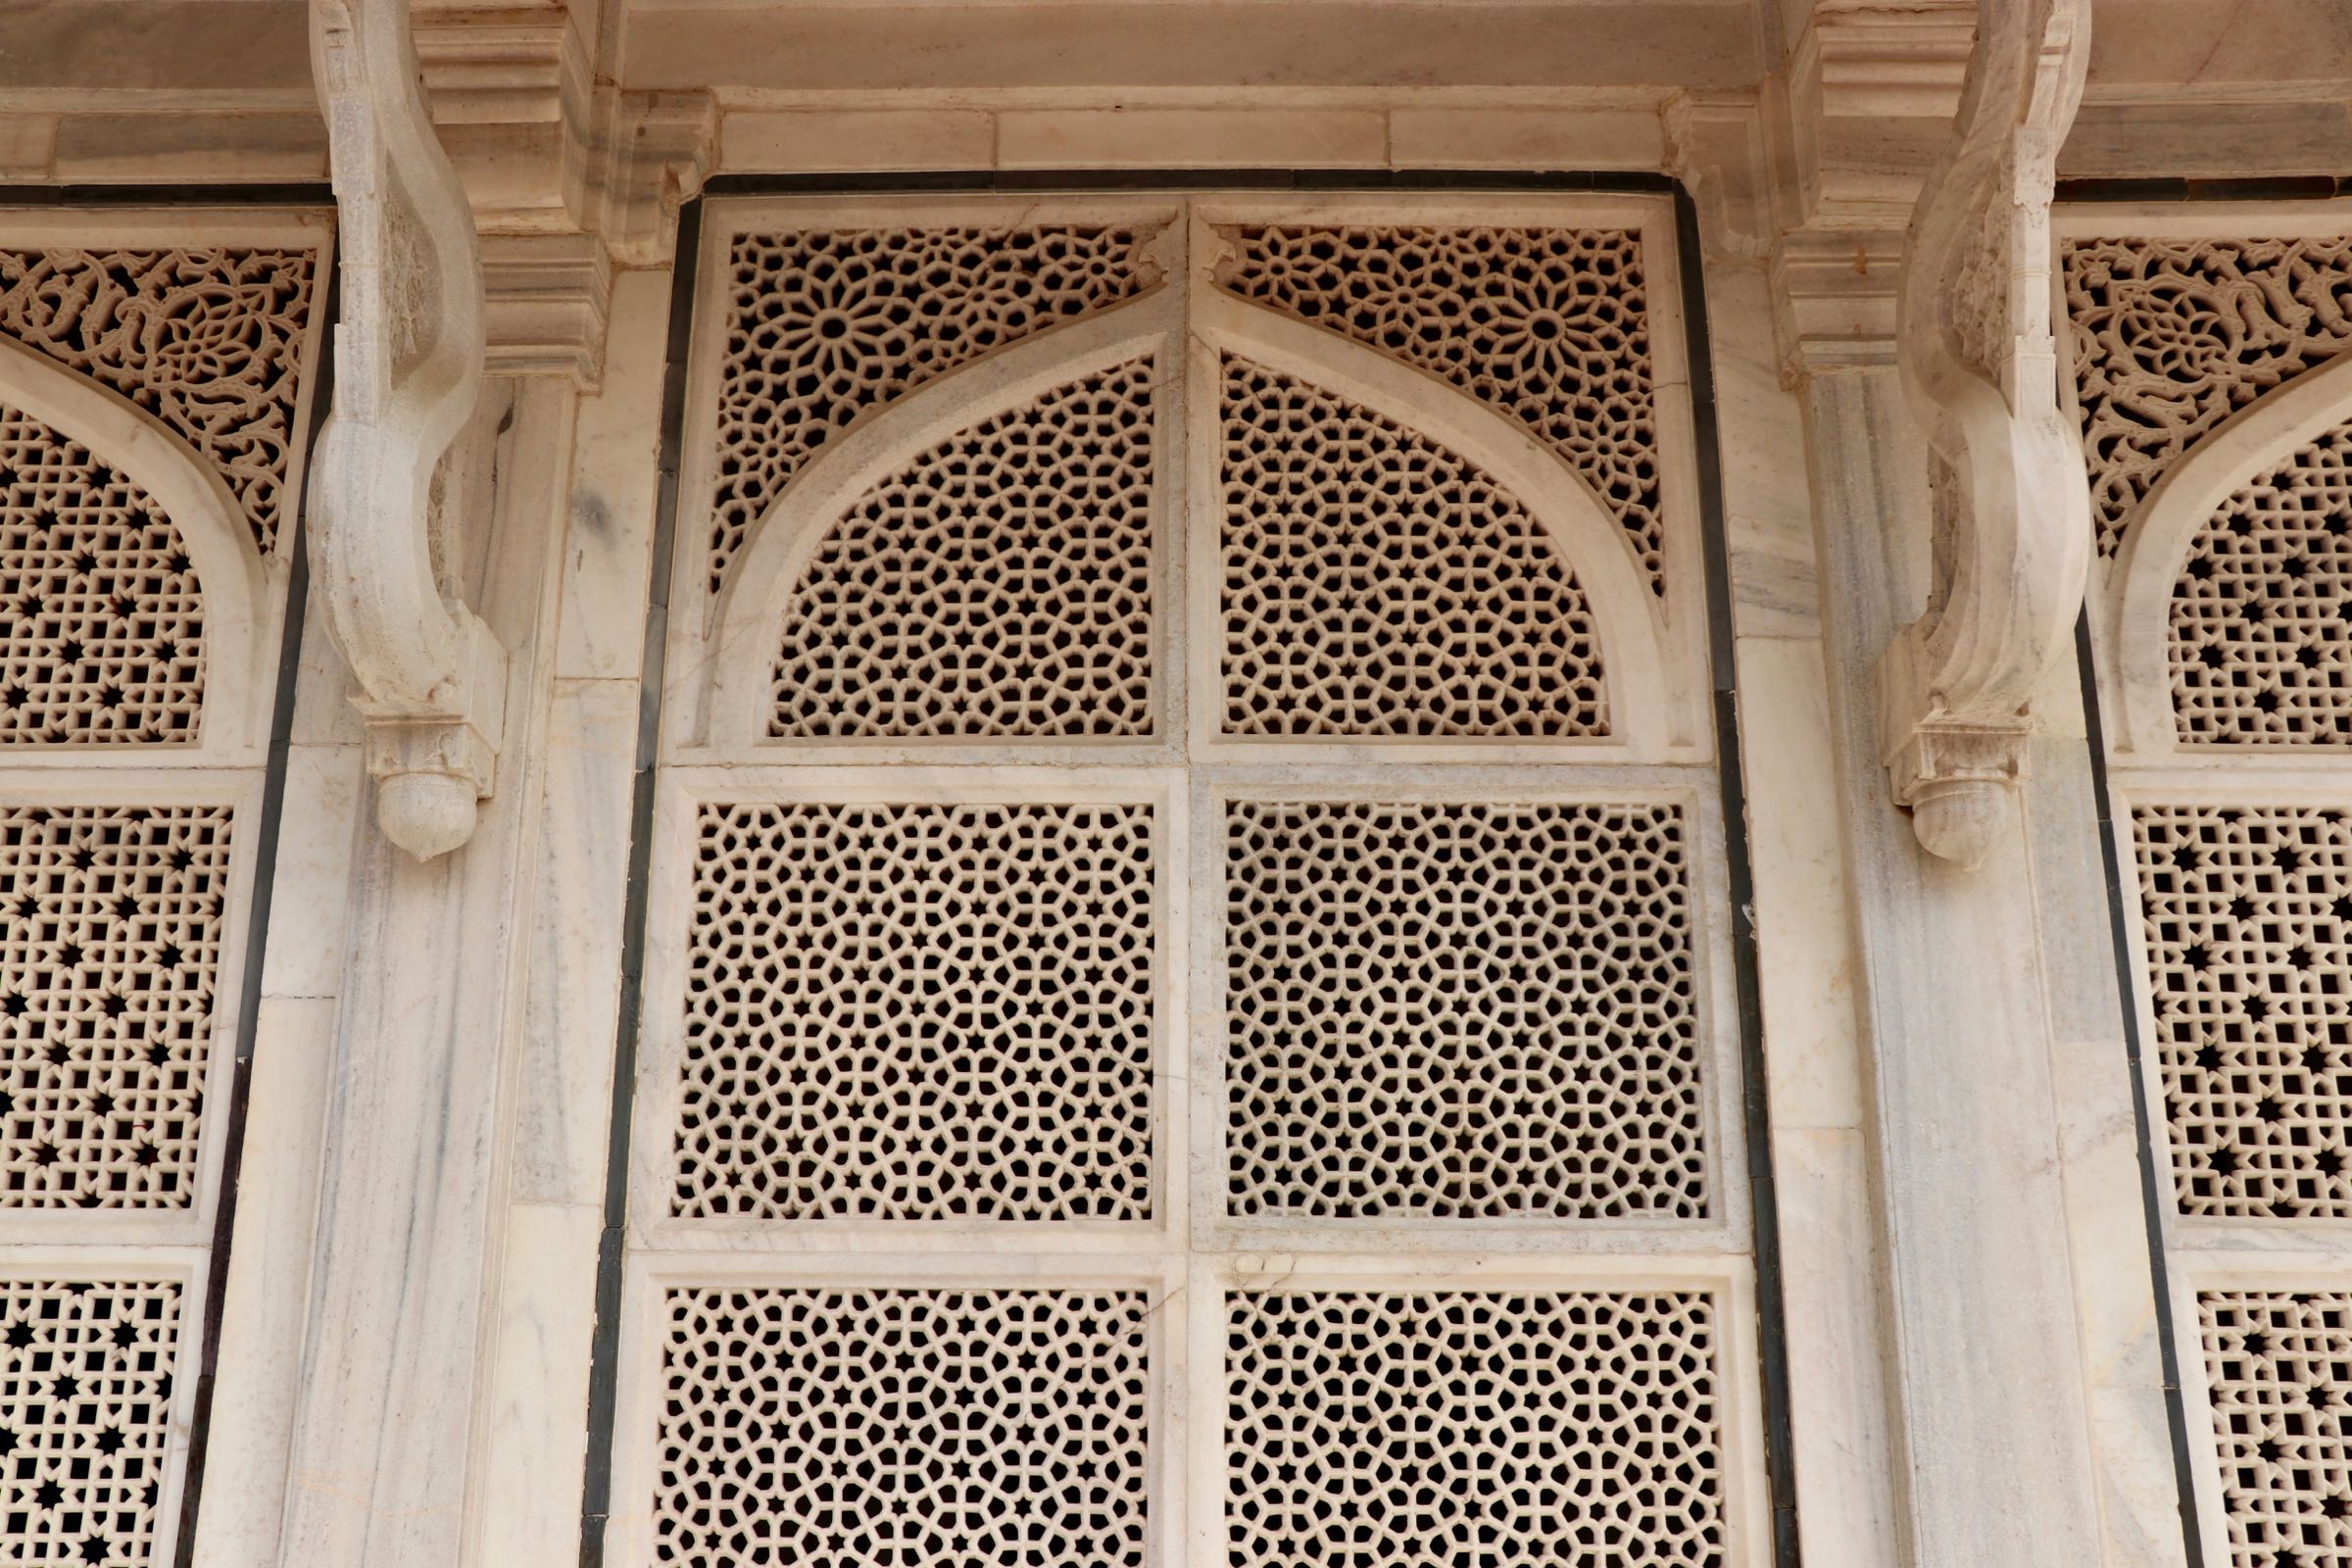 Jali am Mausoleum von Salim Chishti, Fatehpur Sikri, Indien